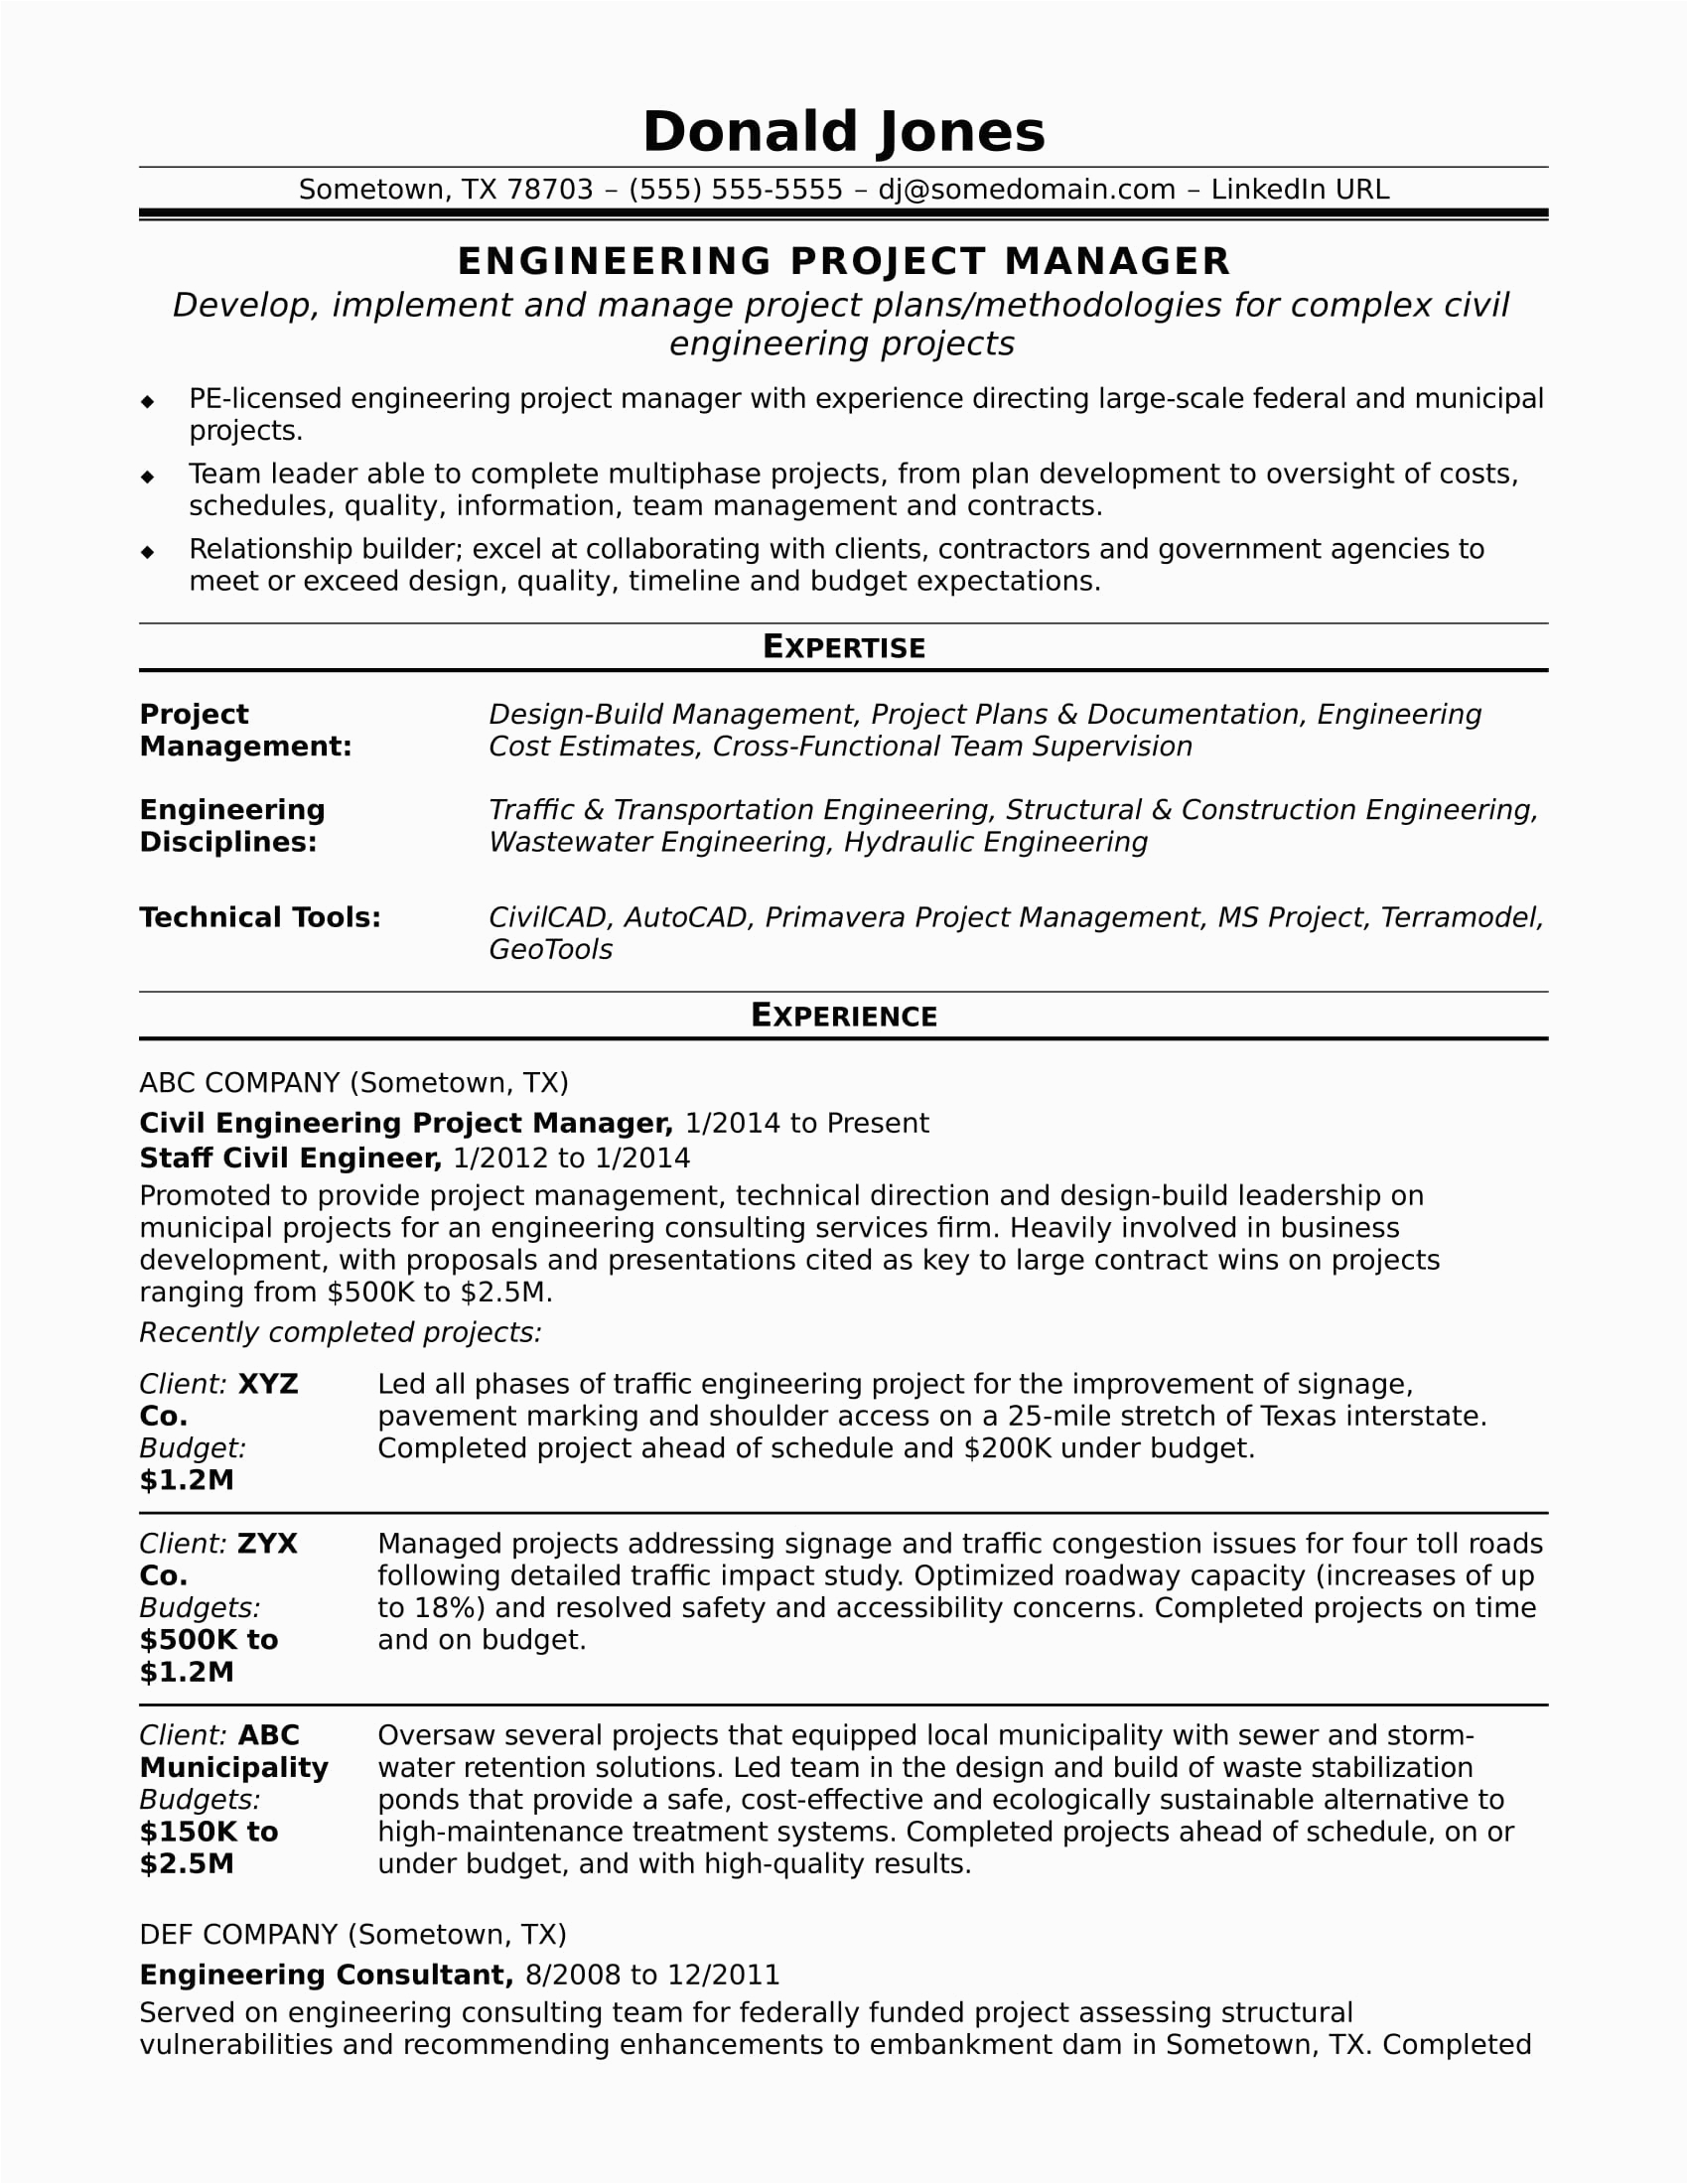 Sample Resume for Midl Level Manager Sample Resume for A Midlevel Engineering Project Manager